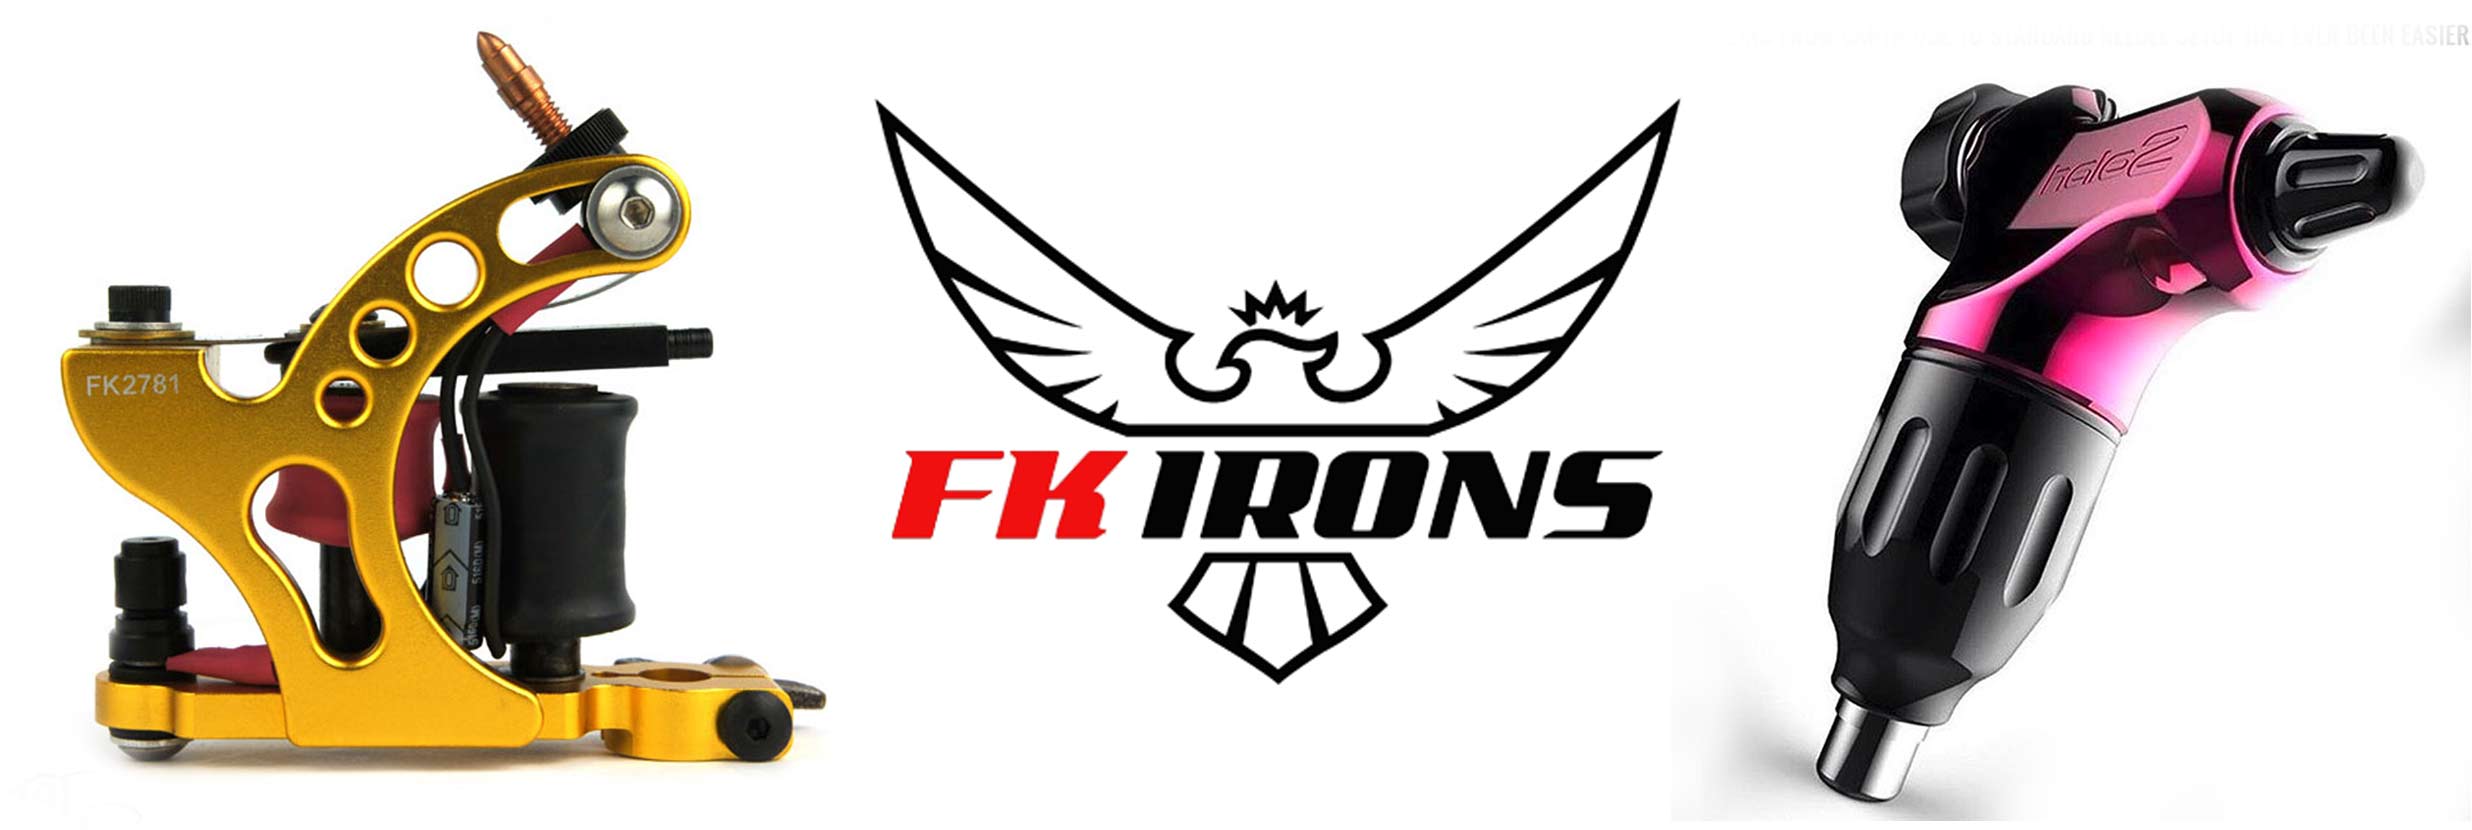 Fk irons